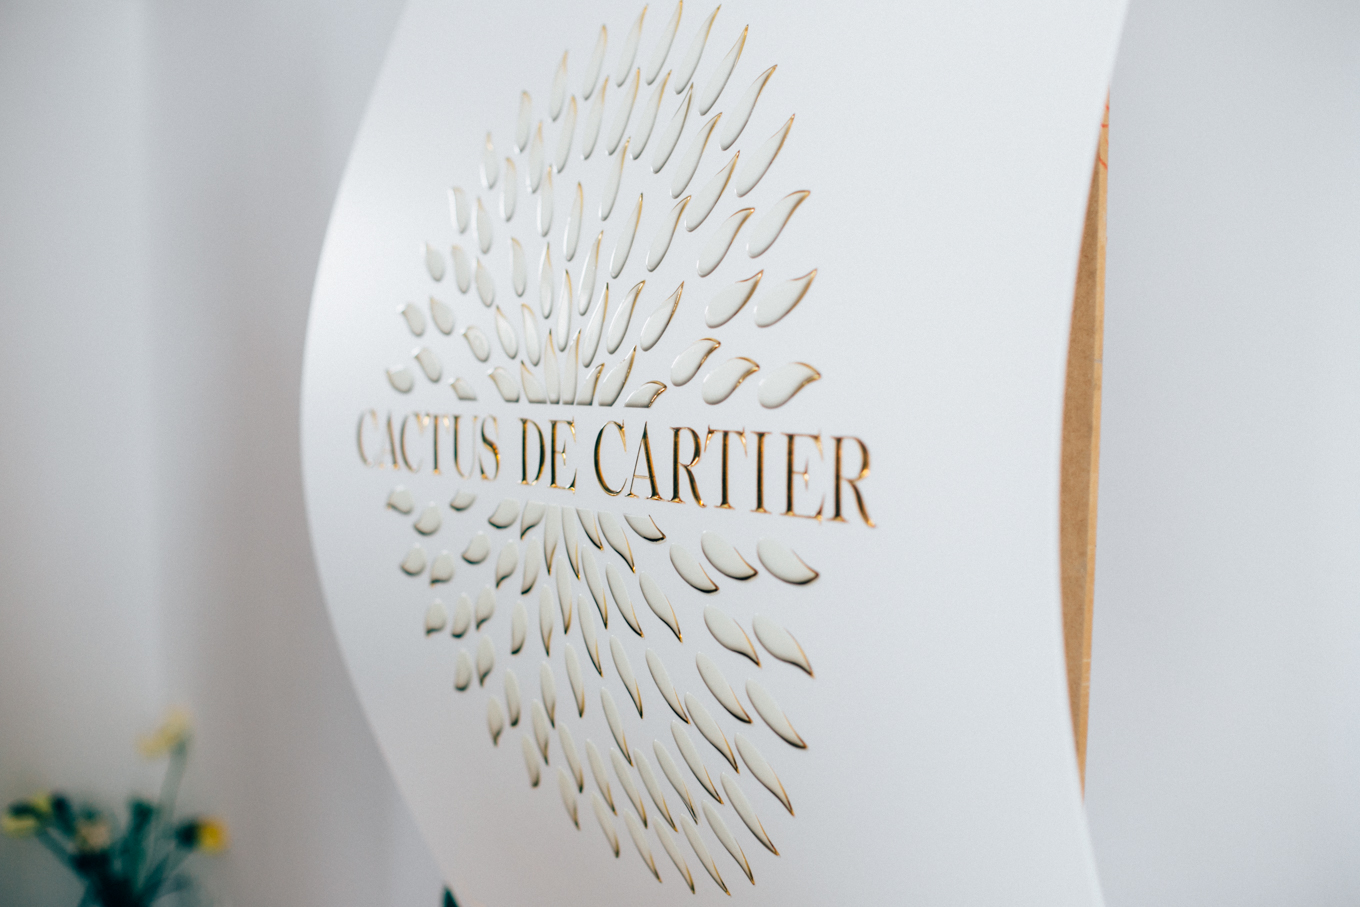 Cartier Press Day Paris | The Daily Dose